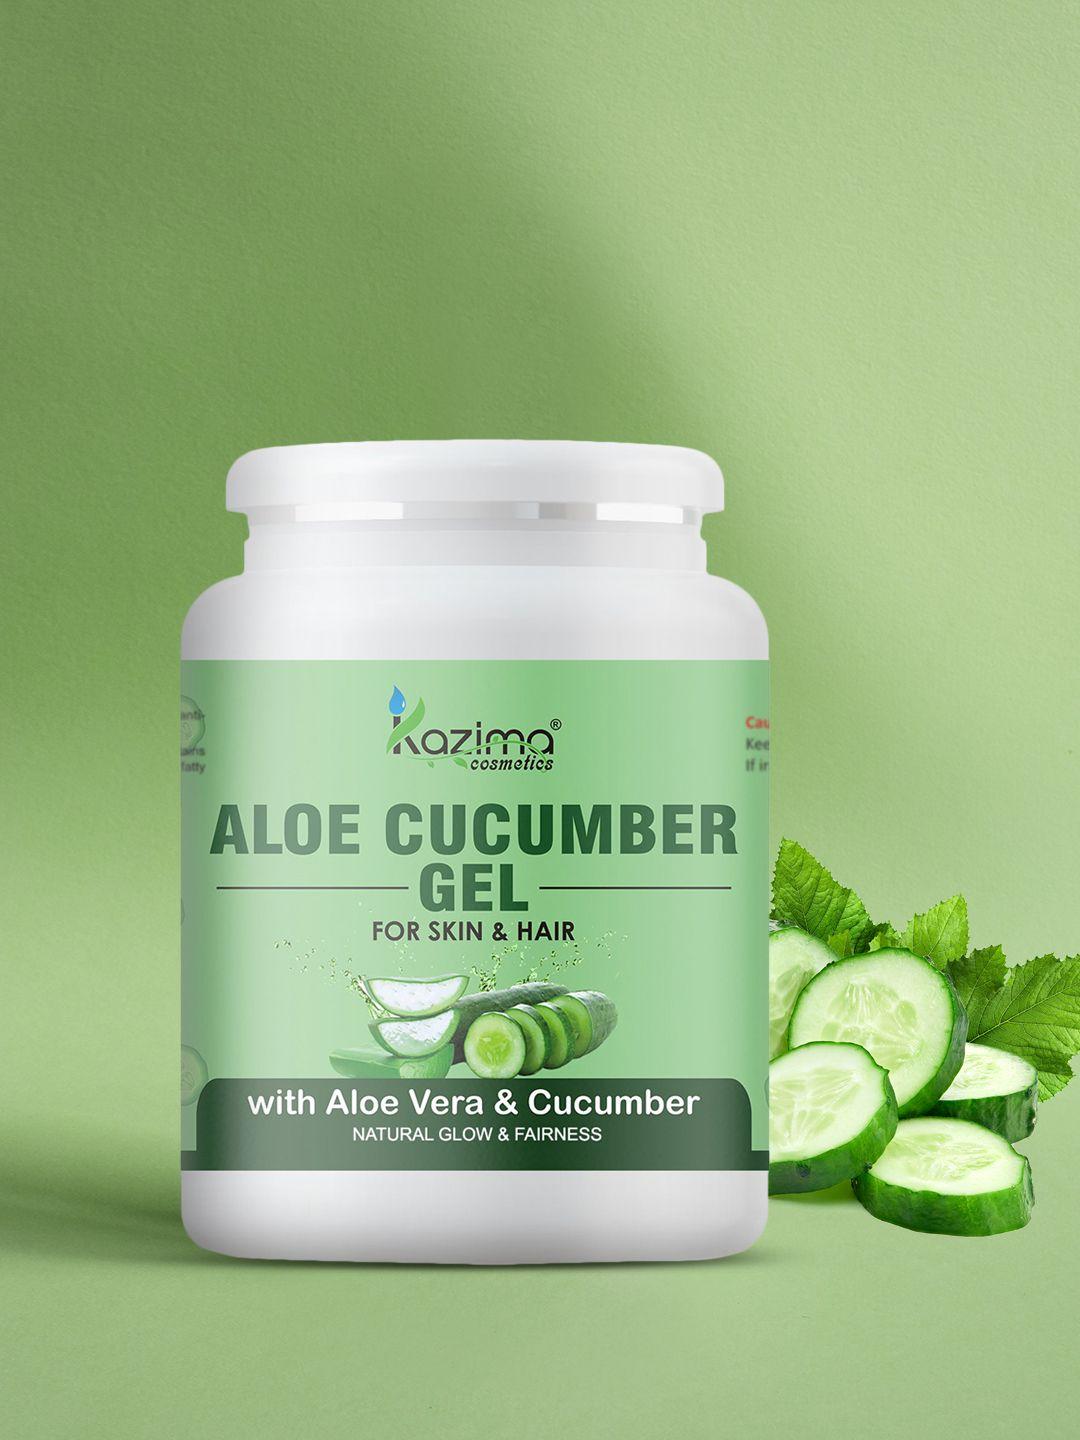 kazima aloe cucumber gel for skin & hair - 500g